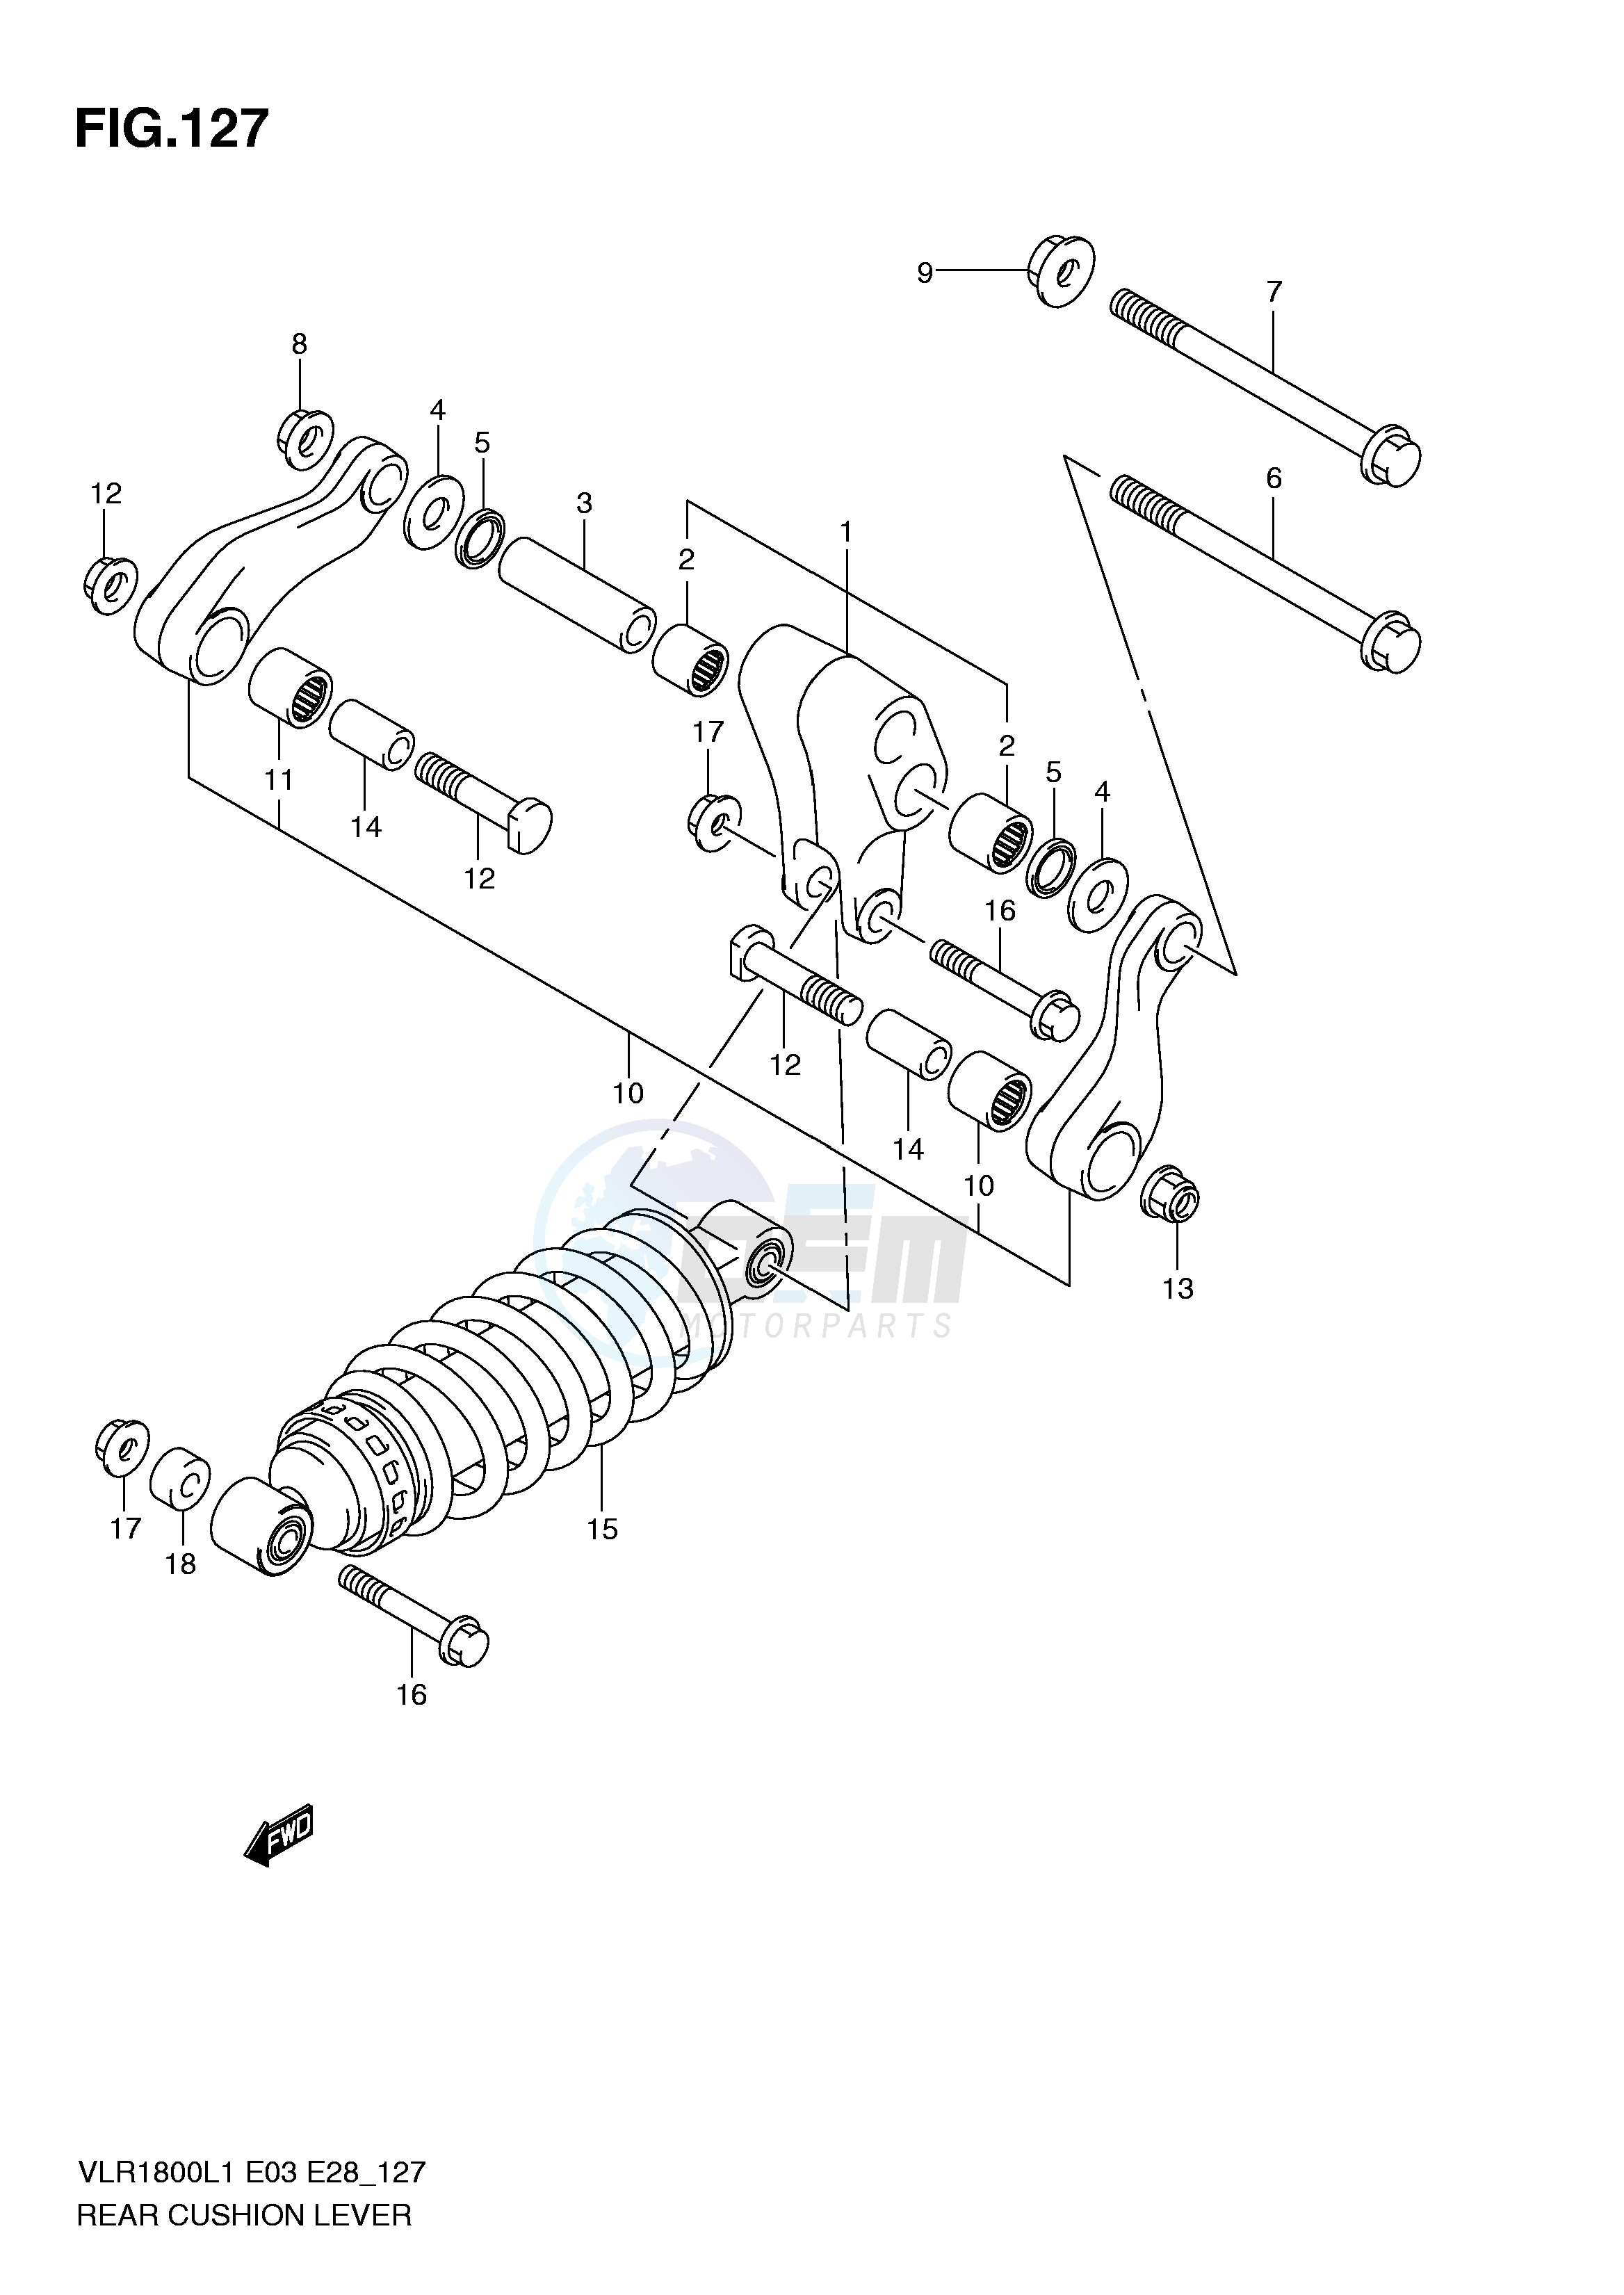 REAR CUSHION LEVER (VLR1800TL1 E28) blueprint